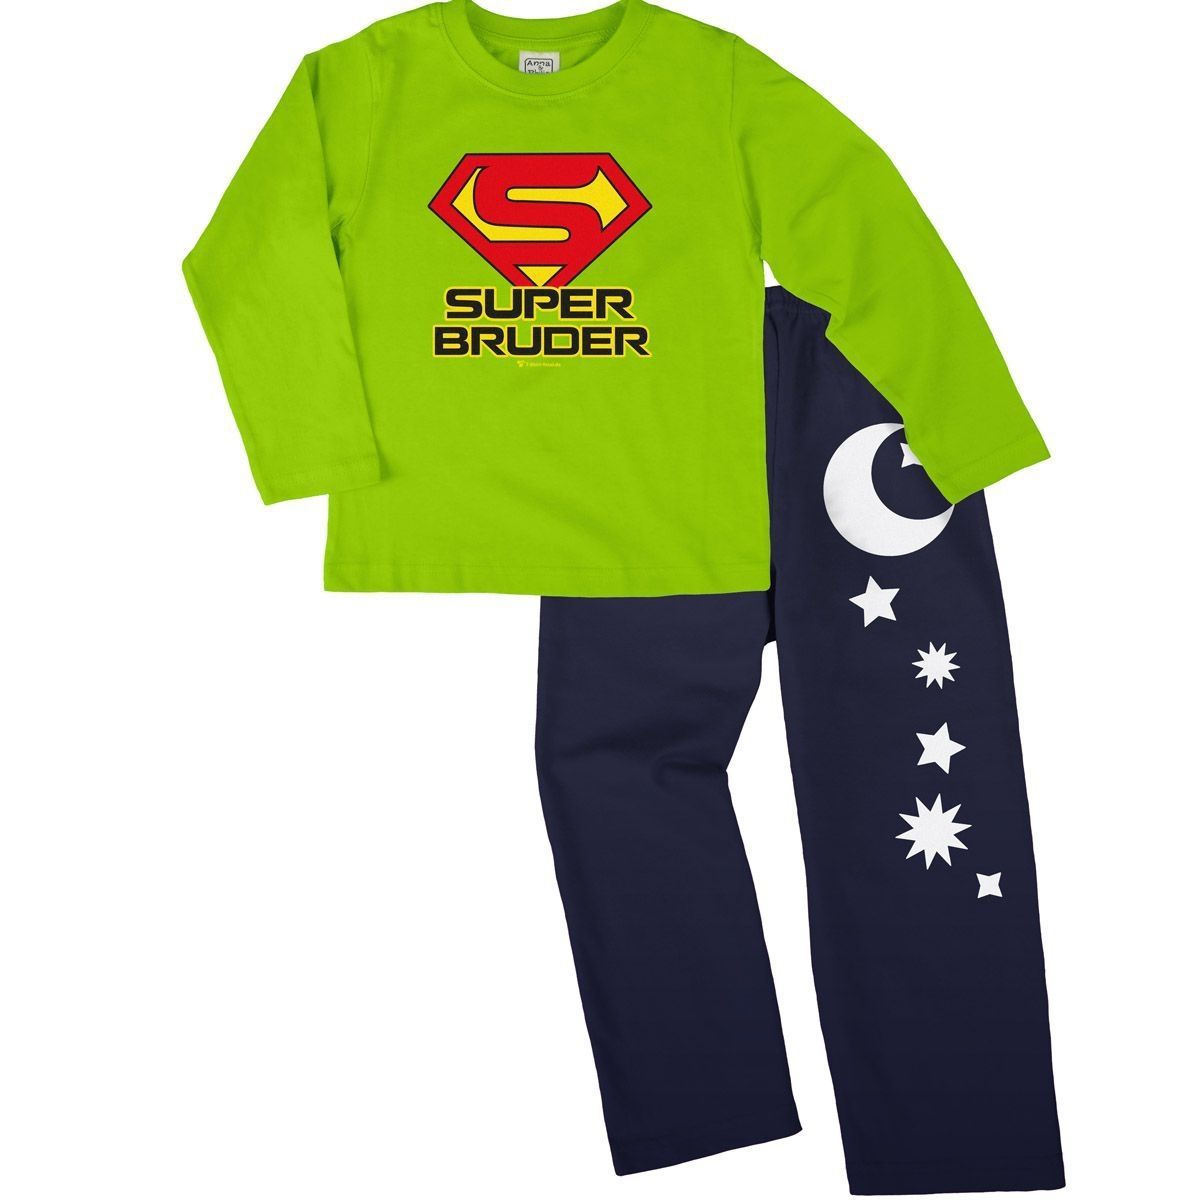 Super Bruder Pyjama Set hellgrün / navy 134 / 140